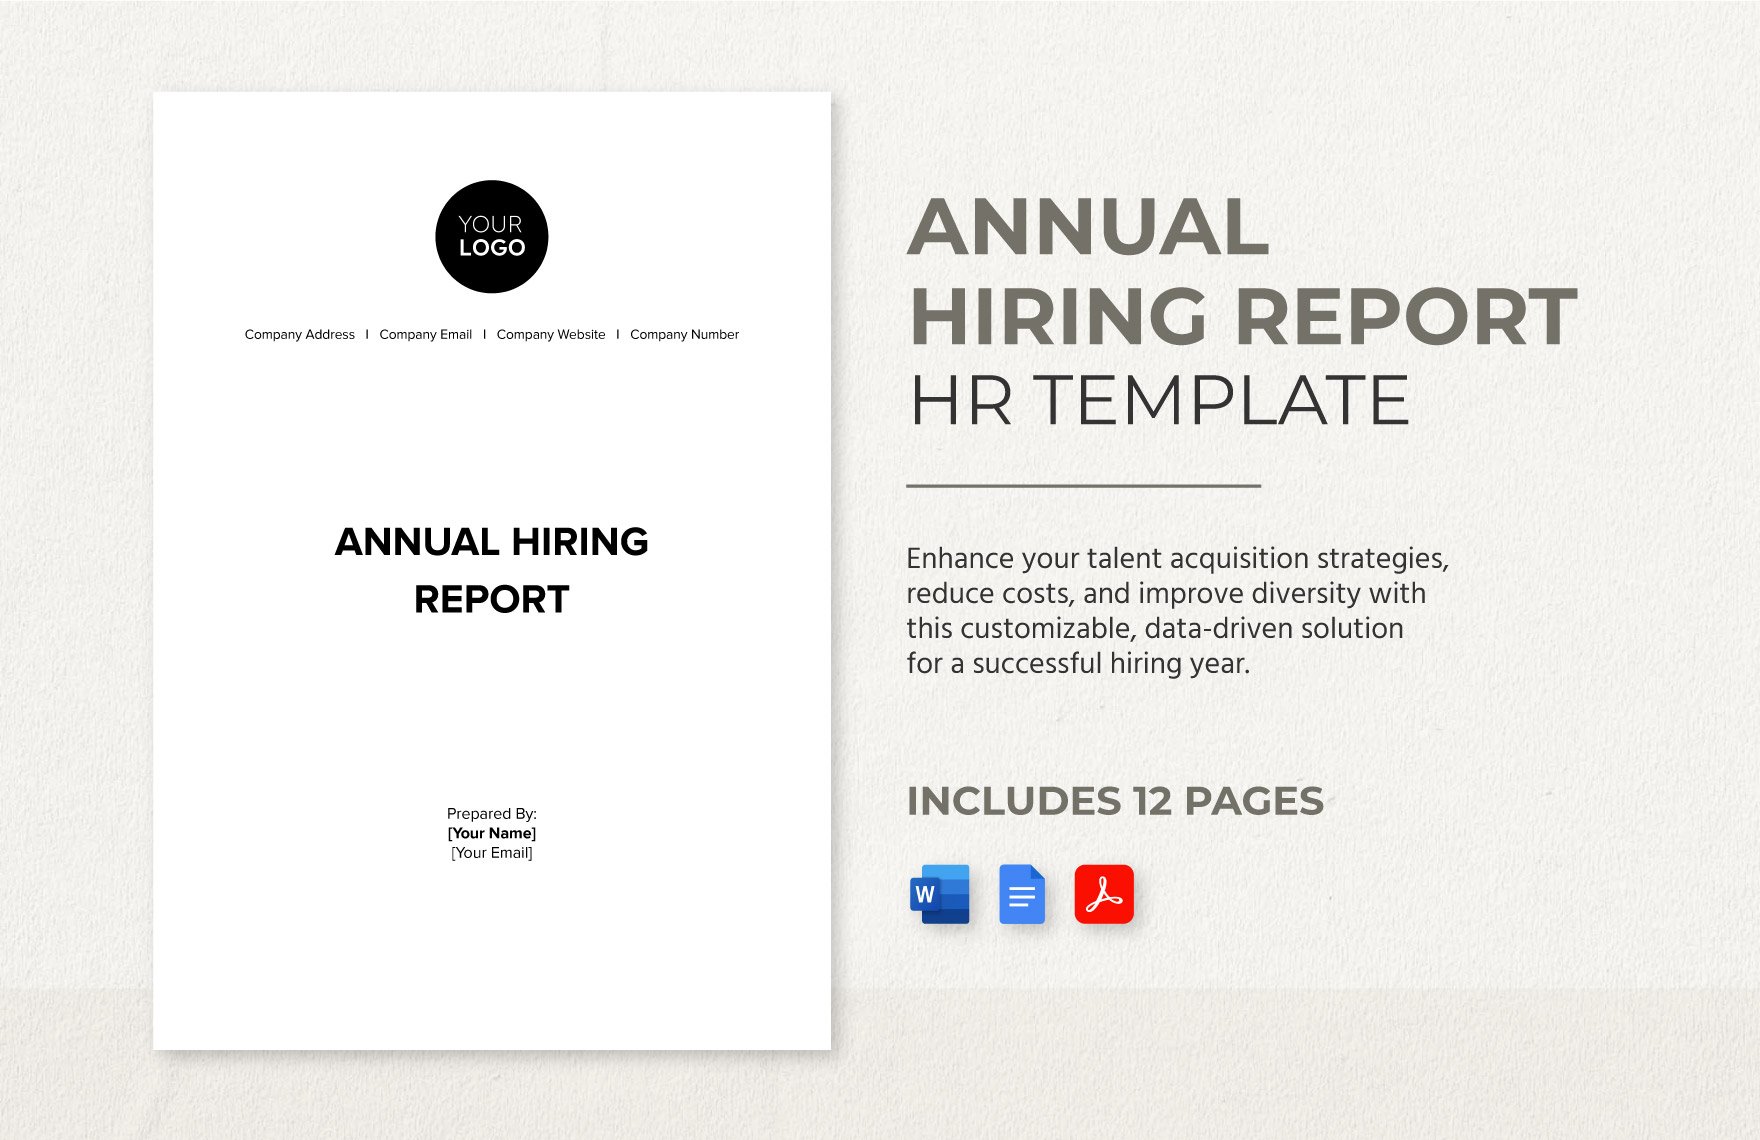 Annual Hiring Report HR Template